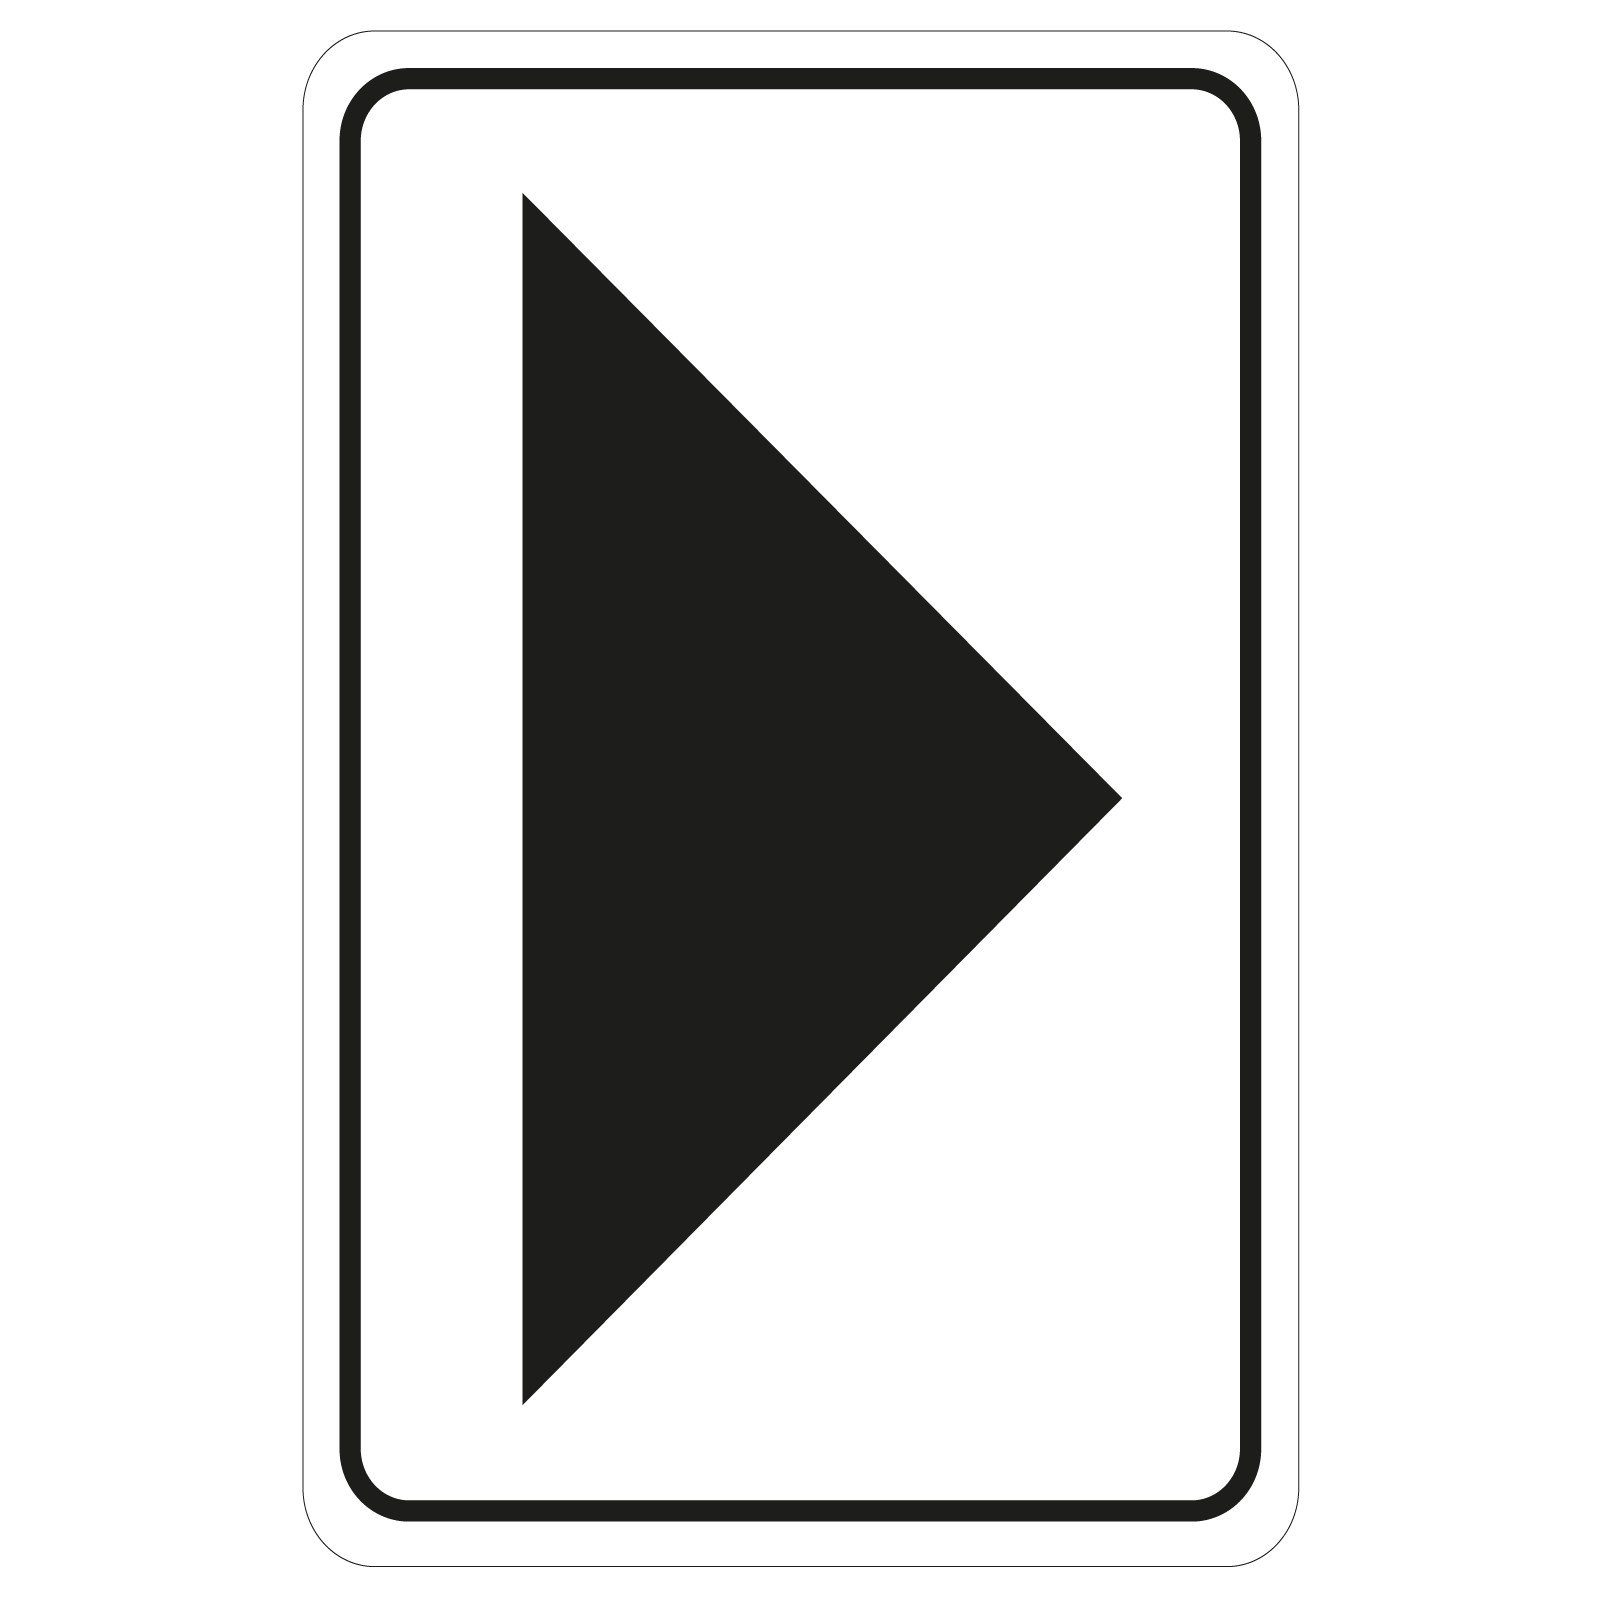 Large Arrow Door Sign - Black on White 